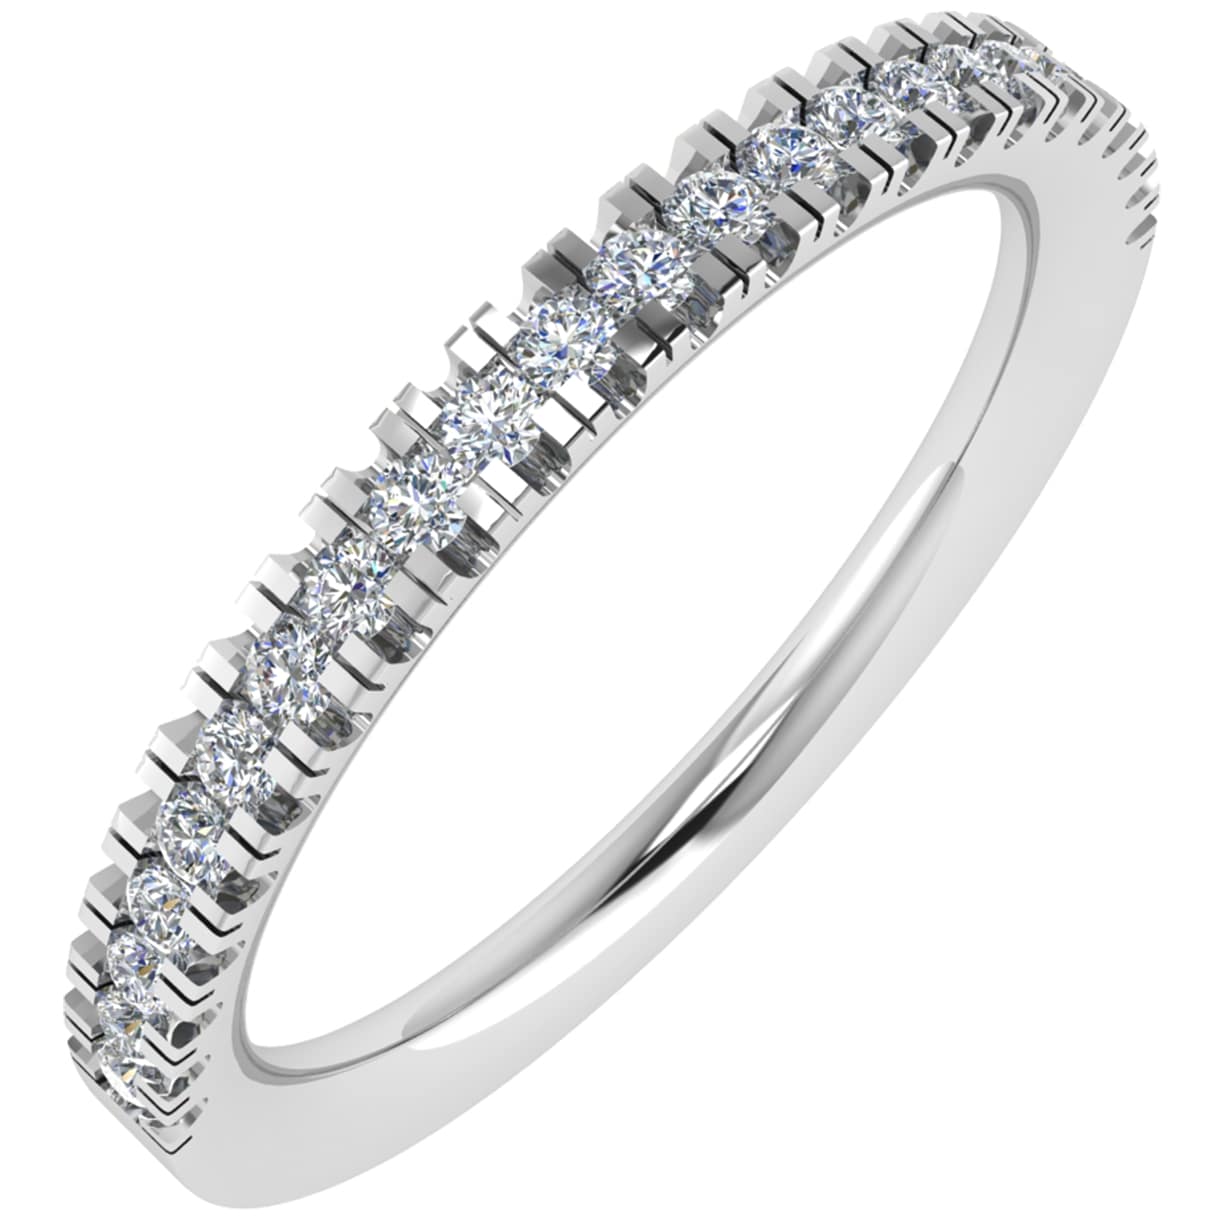 0.25 - 1.00 Carat Lab-Created Eternity Diamond Rings